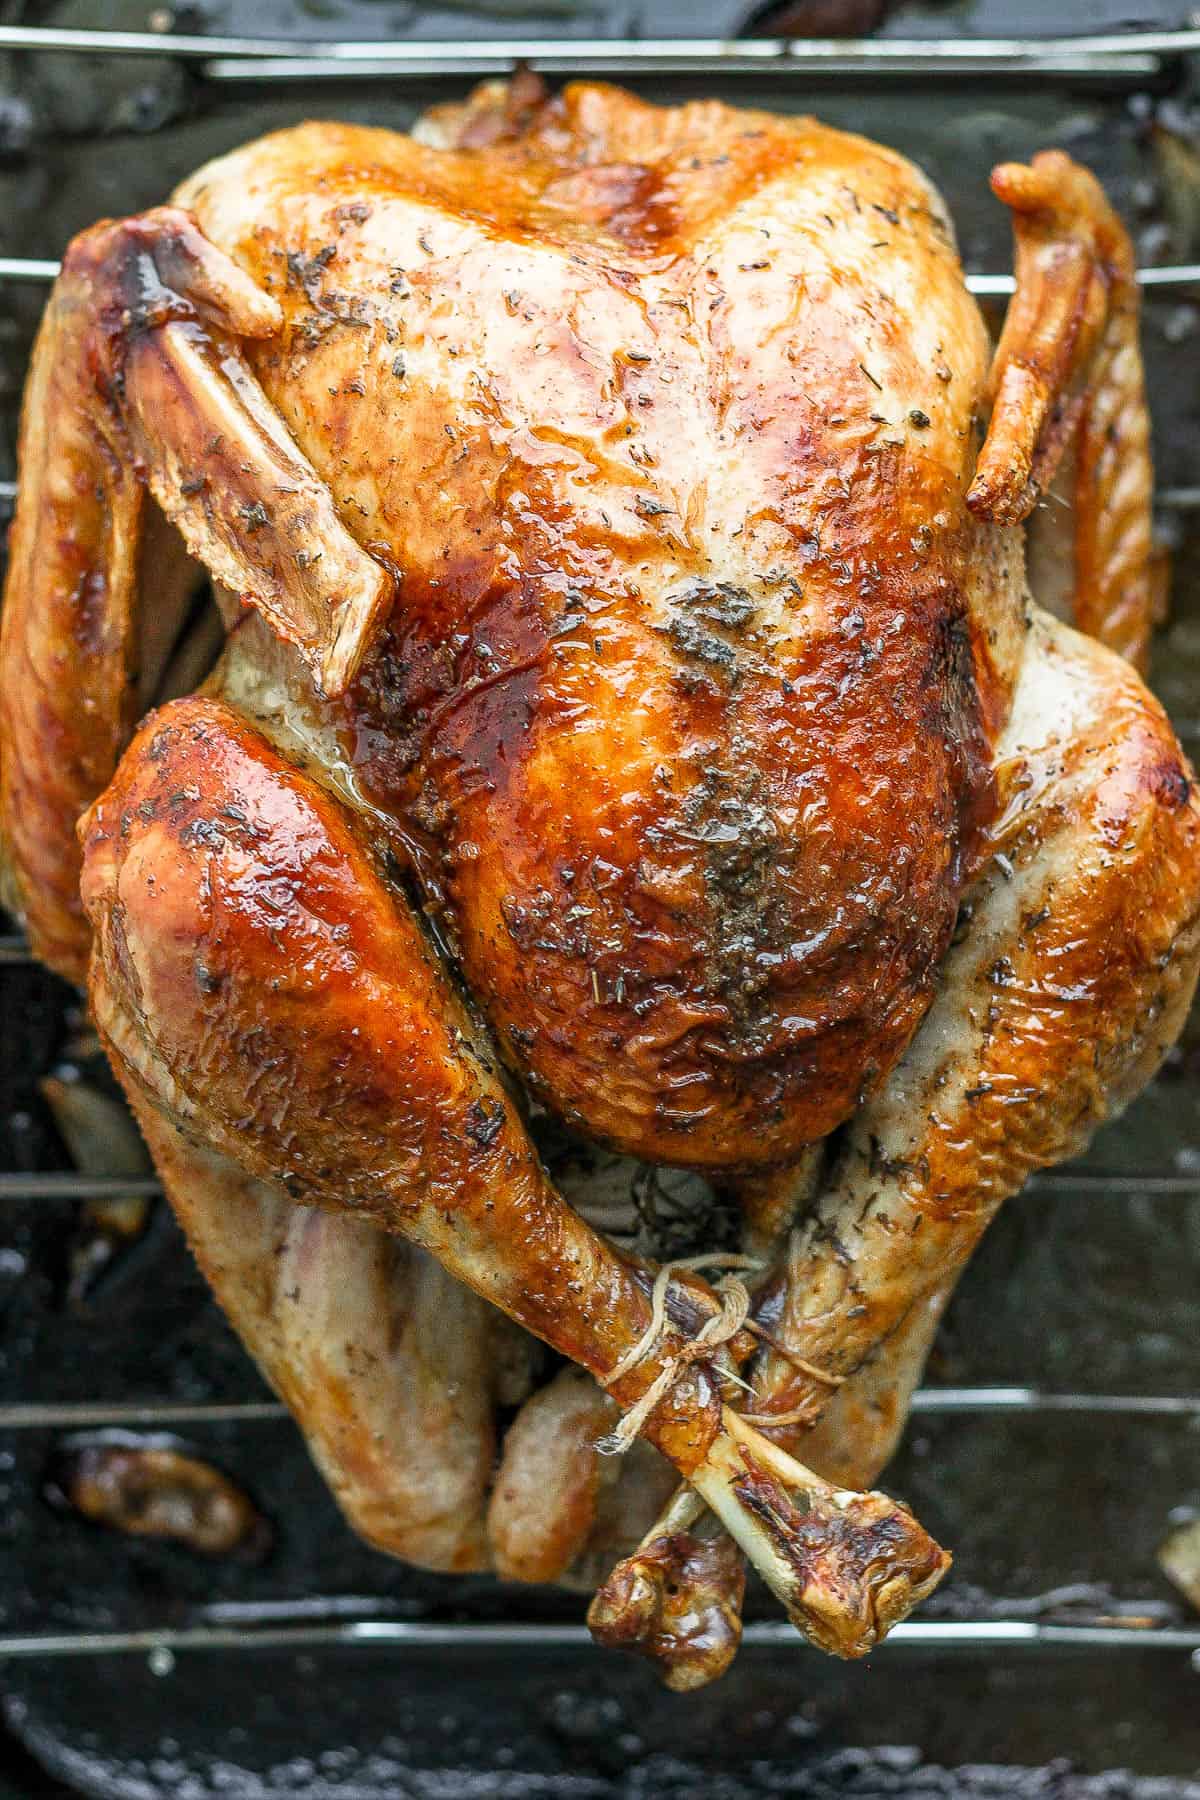 A fully roasted turkey on a roasting pan.